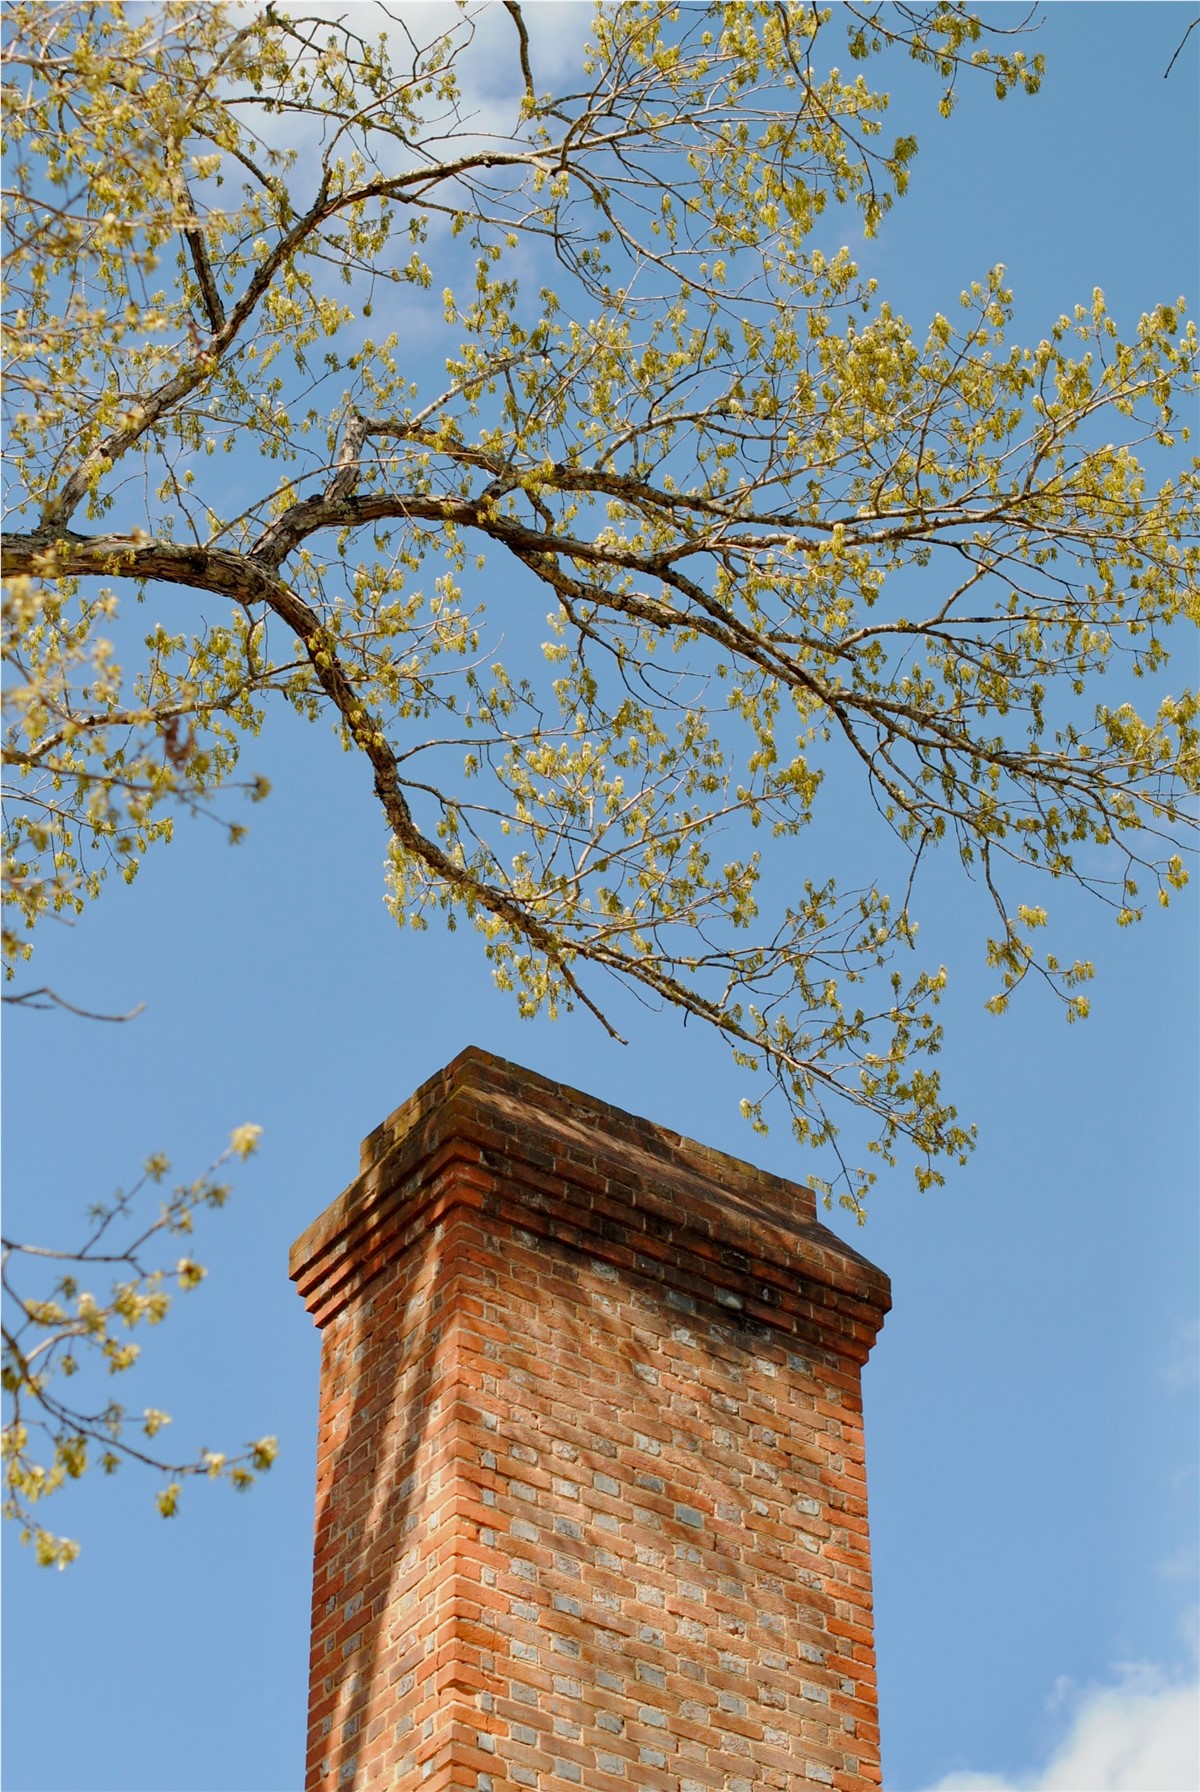 A brick chimney against a blue sky. 